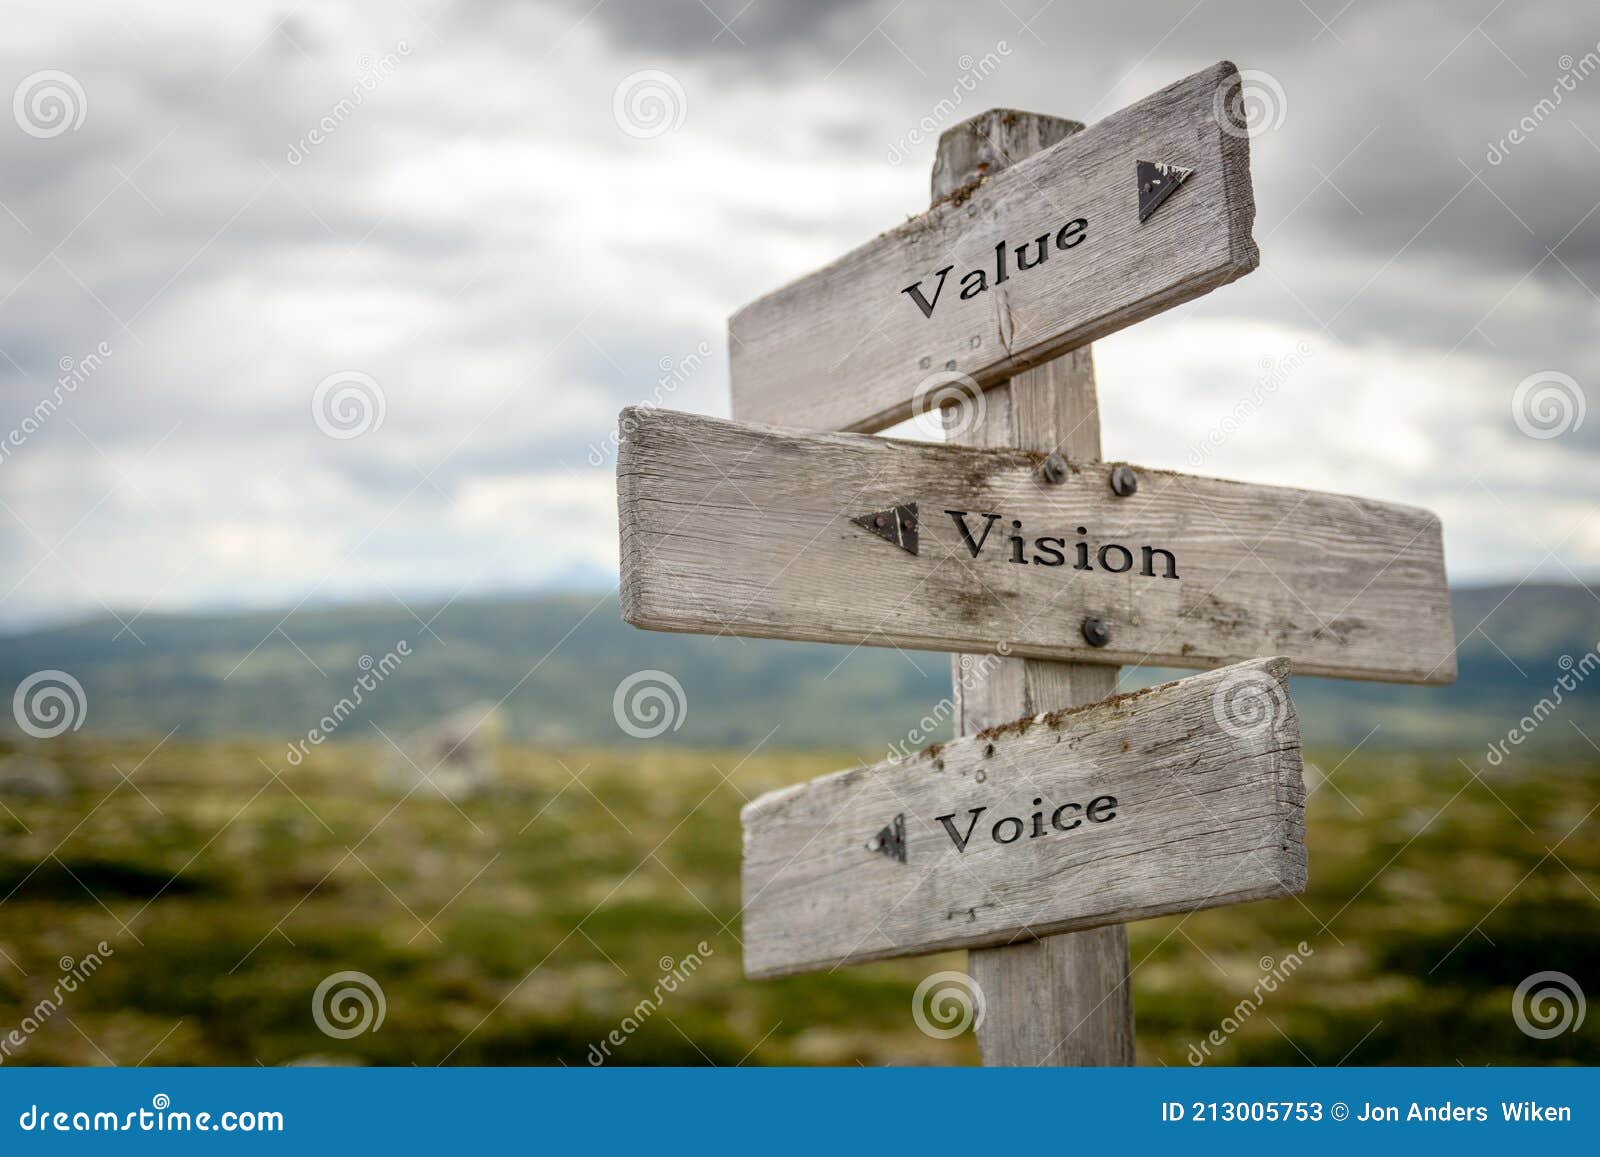 value vision voice text